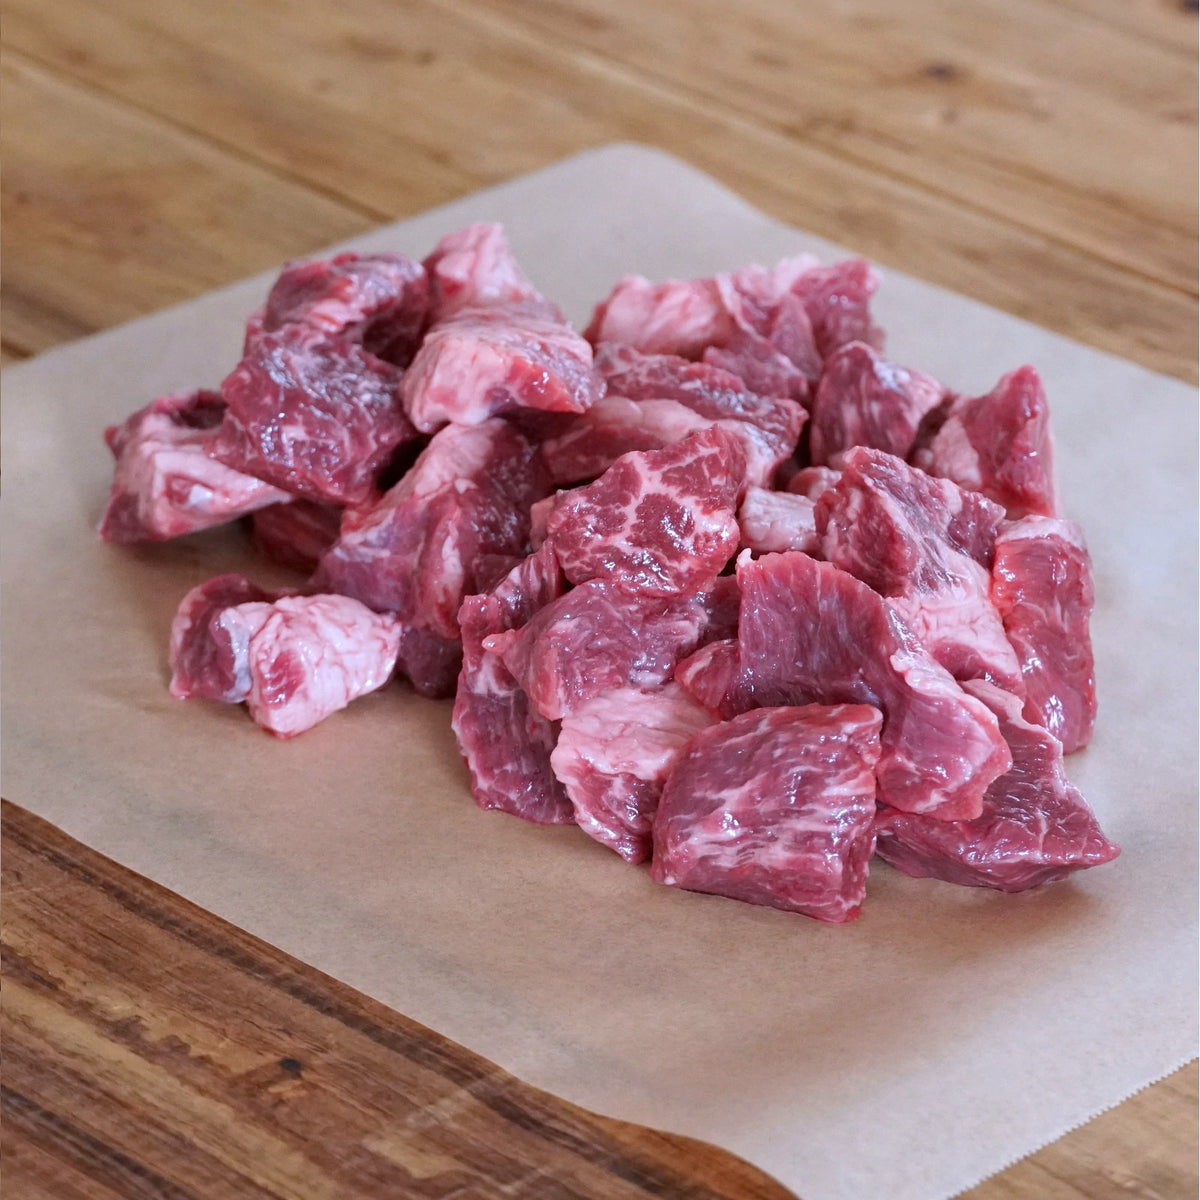 Grain-Fed Beef Stew Cuts from Australia (300g) - Horizon Farms